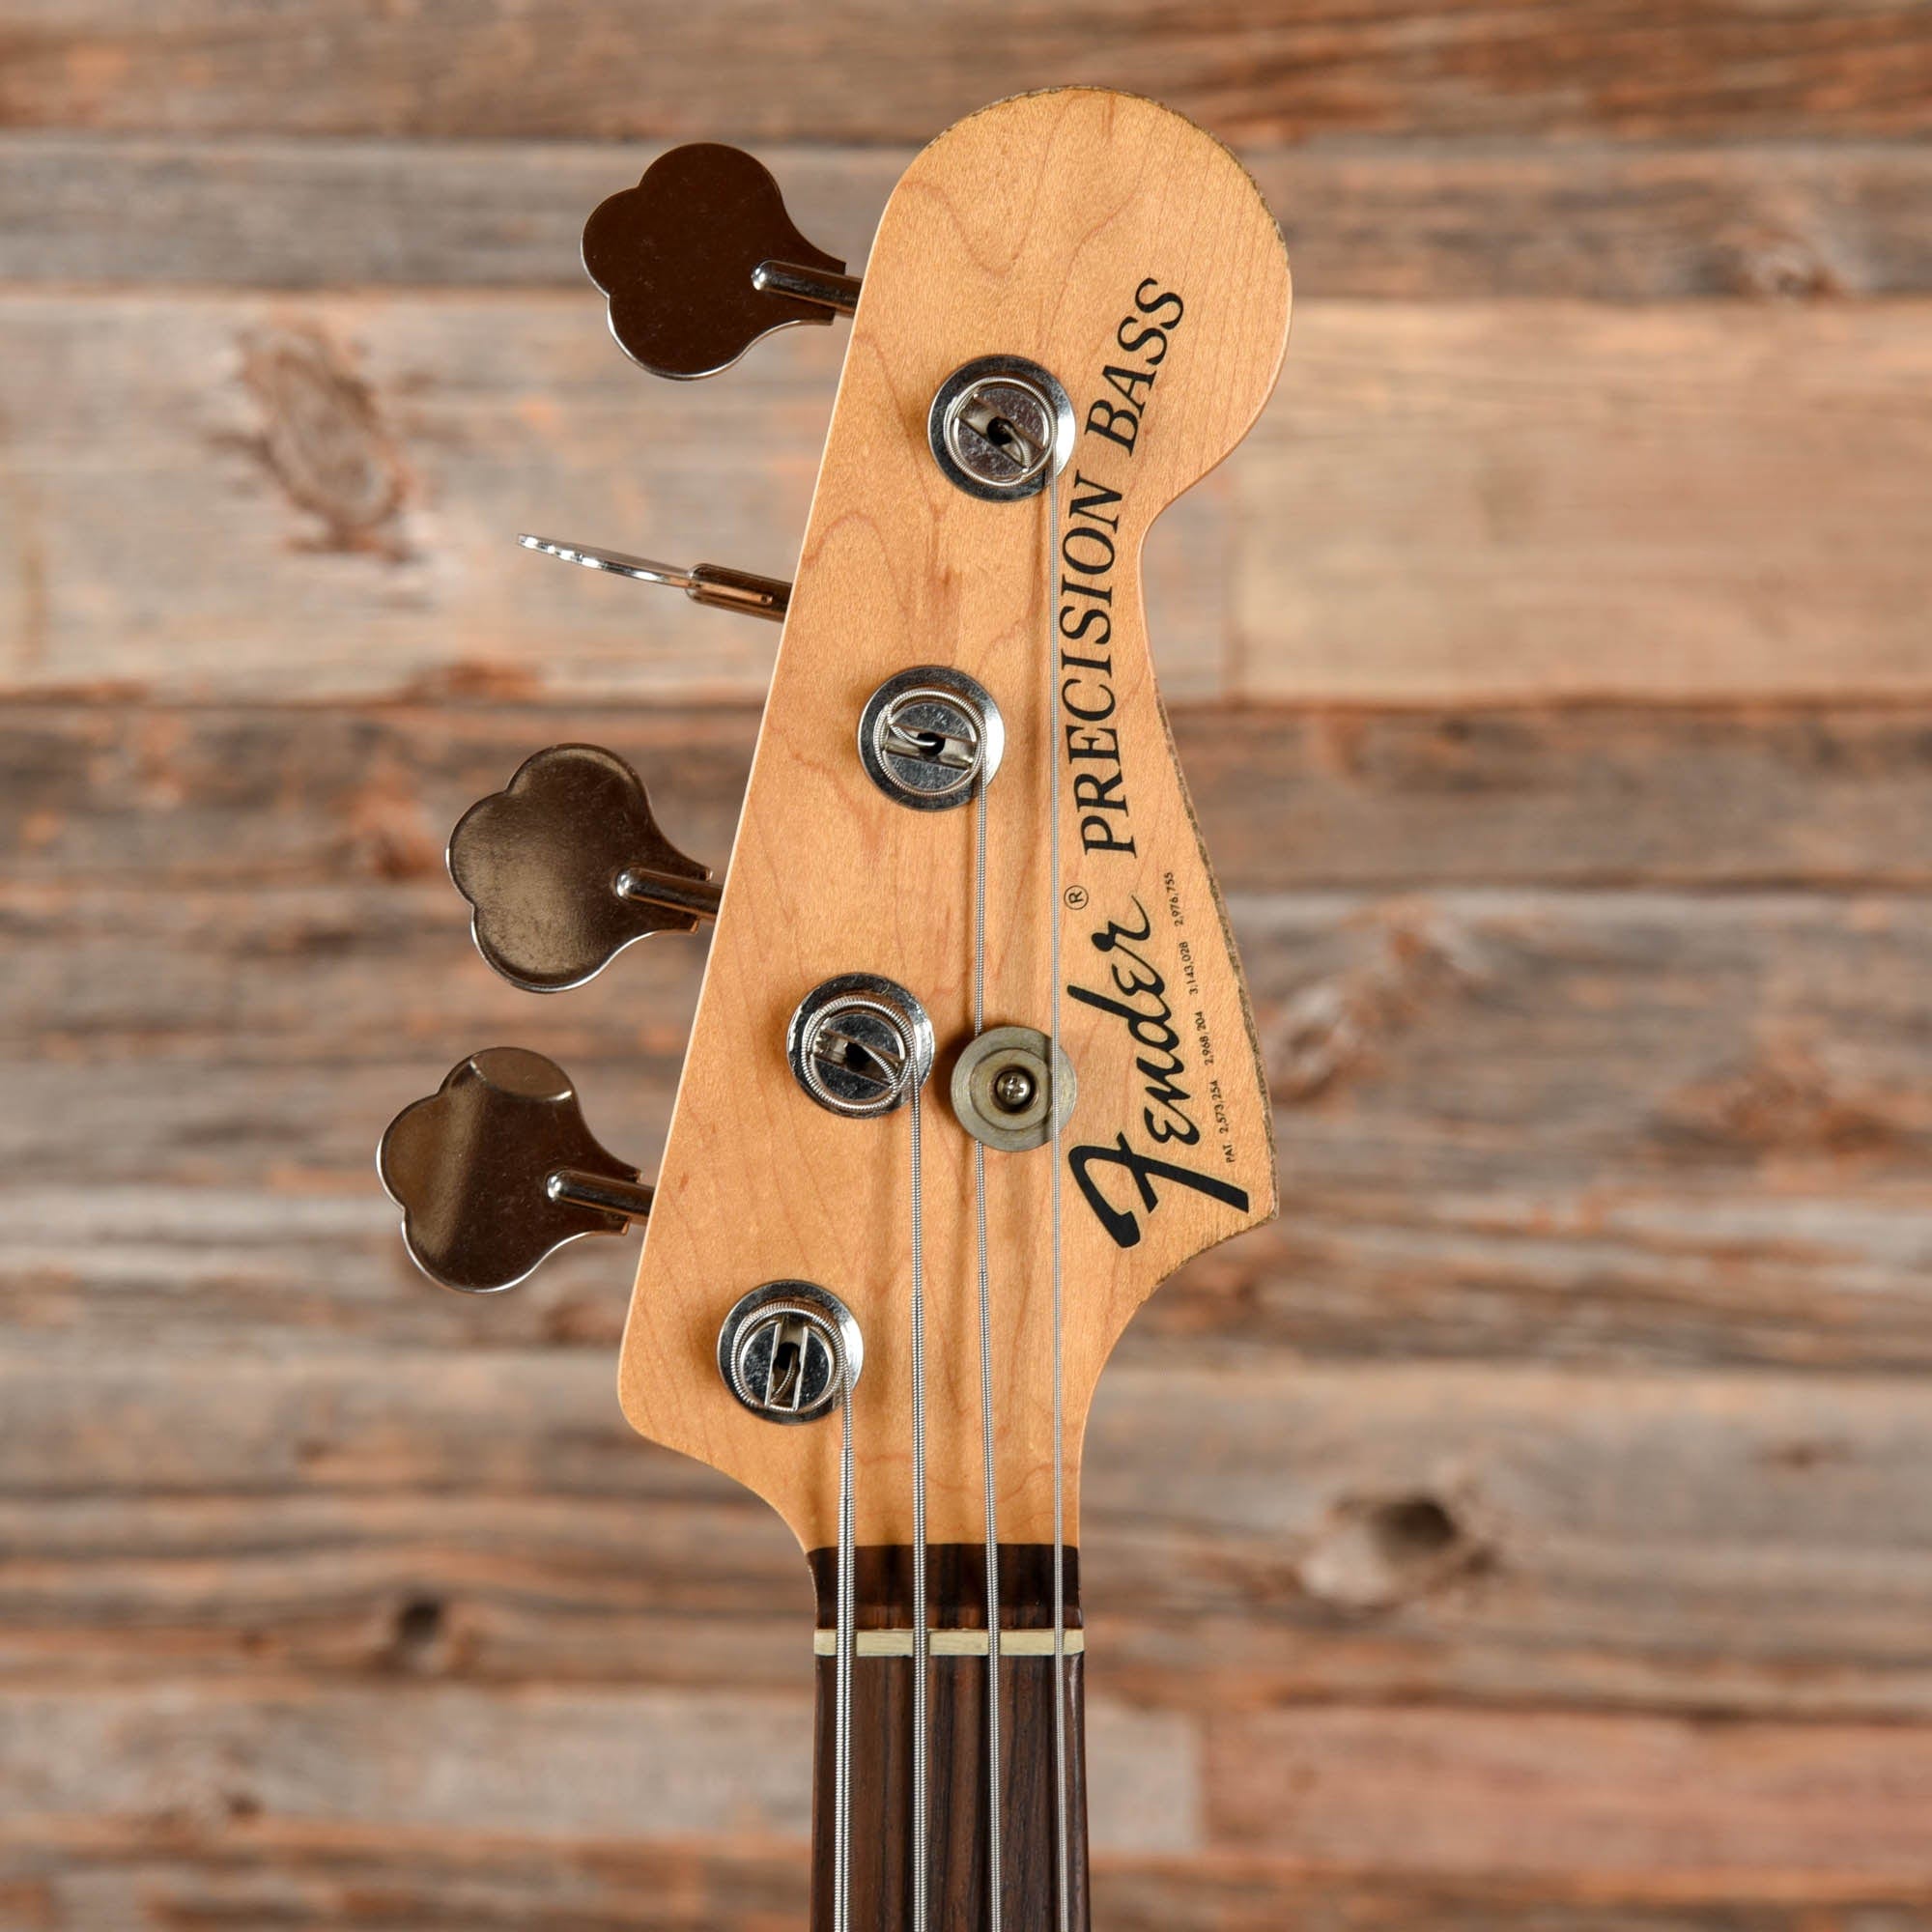 Fender Nate Mendel Artist Series Signature Precision Bass Candy Apple Red 2019 Bass Guitars / 4-String